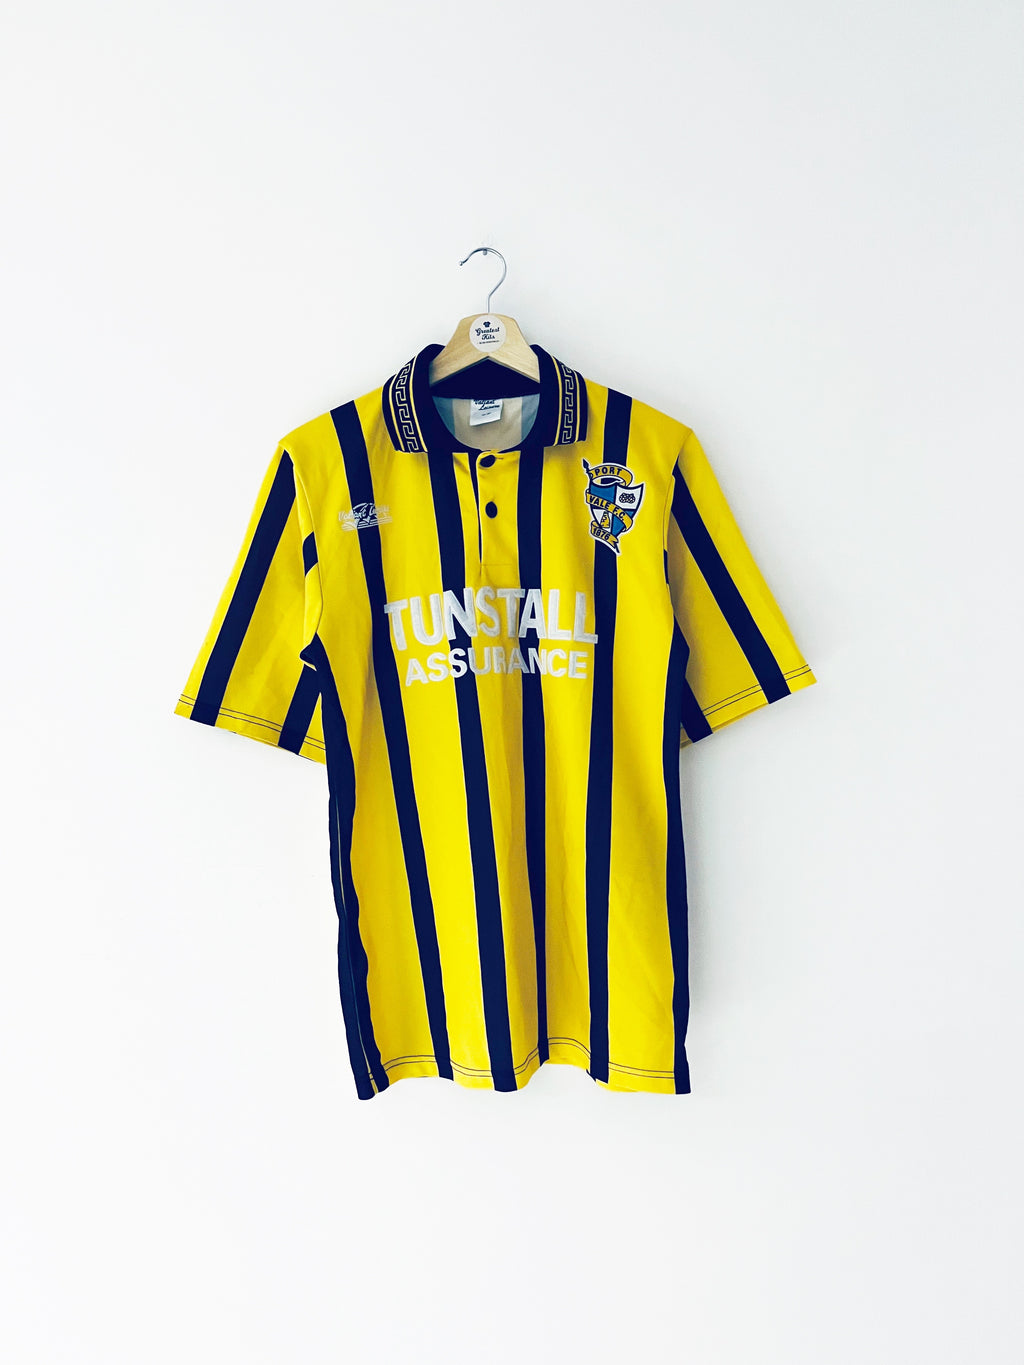 1994/95 Port Vale Away Shirt (S) 8.5/10